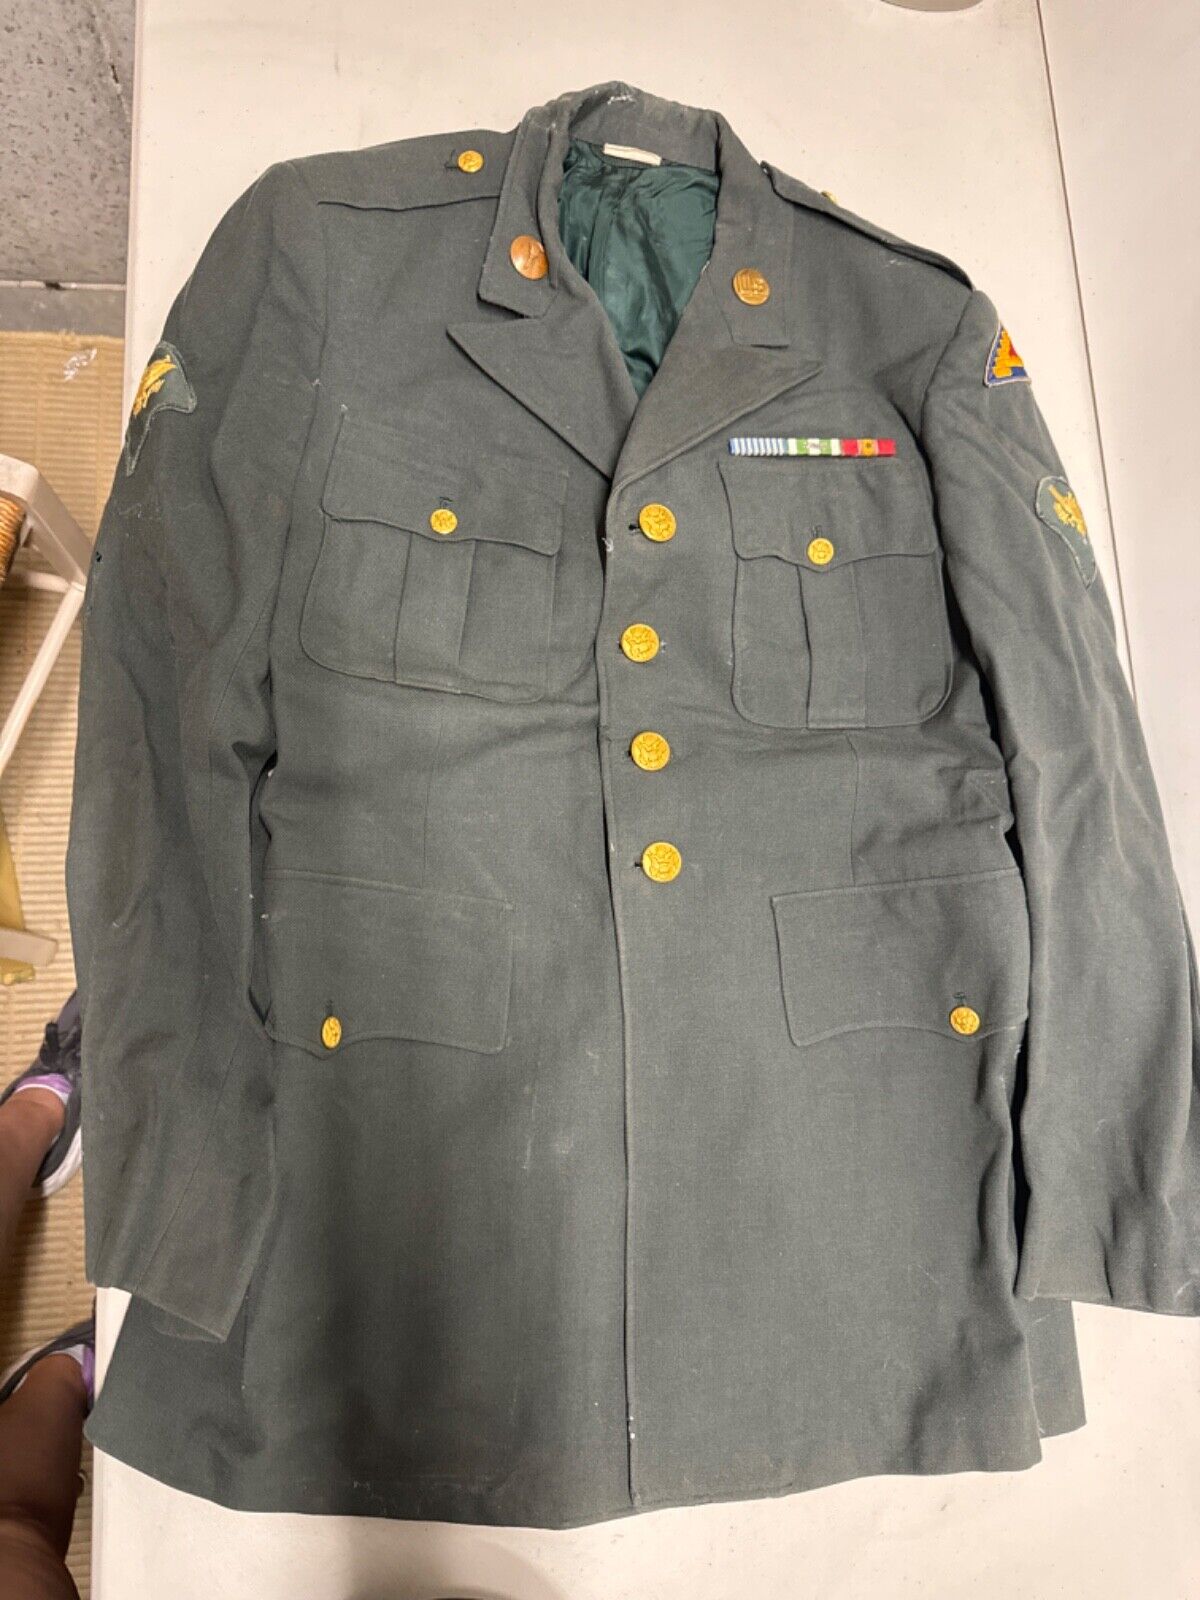 Vintage US Army Uniform Jacket 41L 84052865168